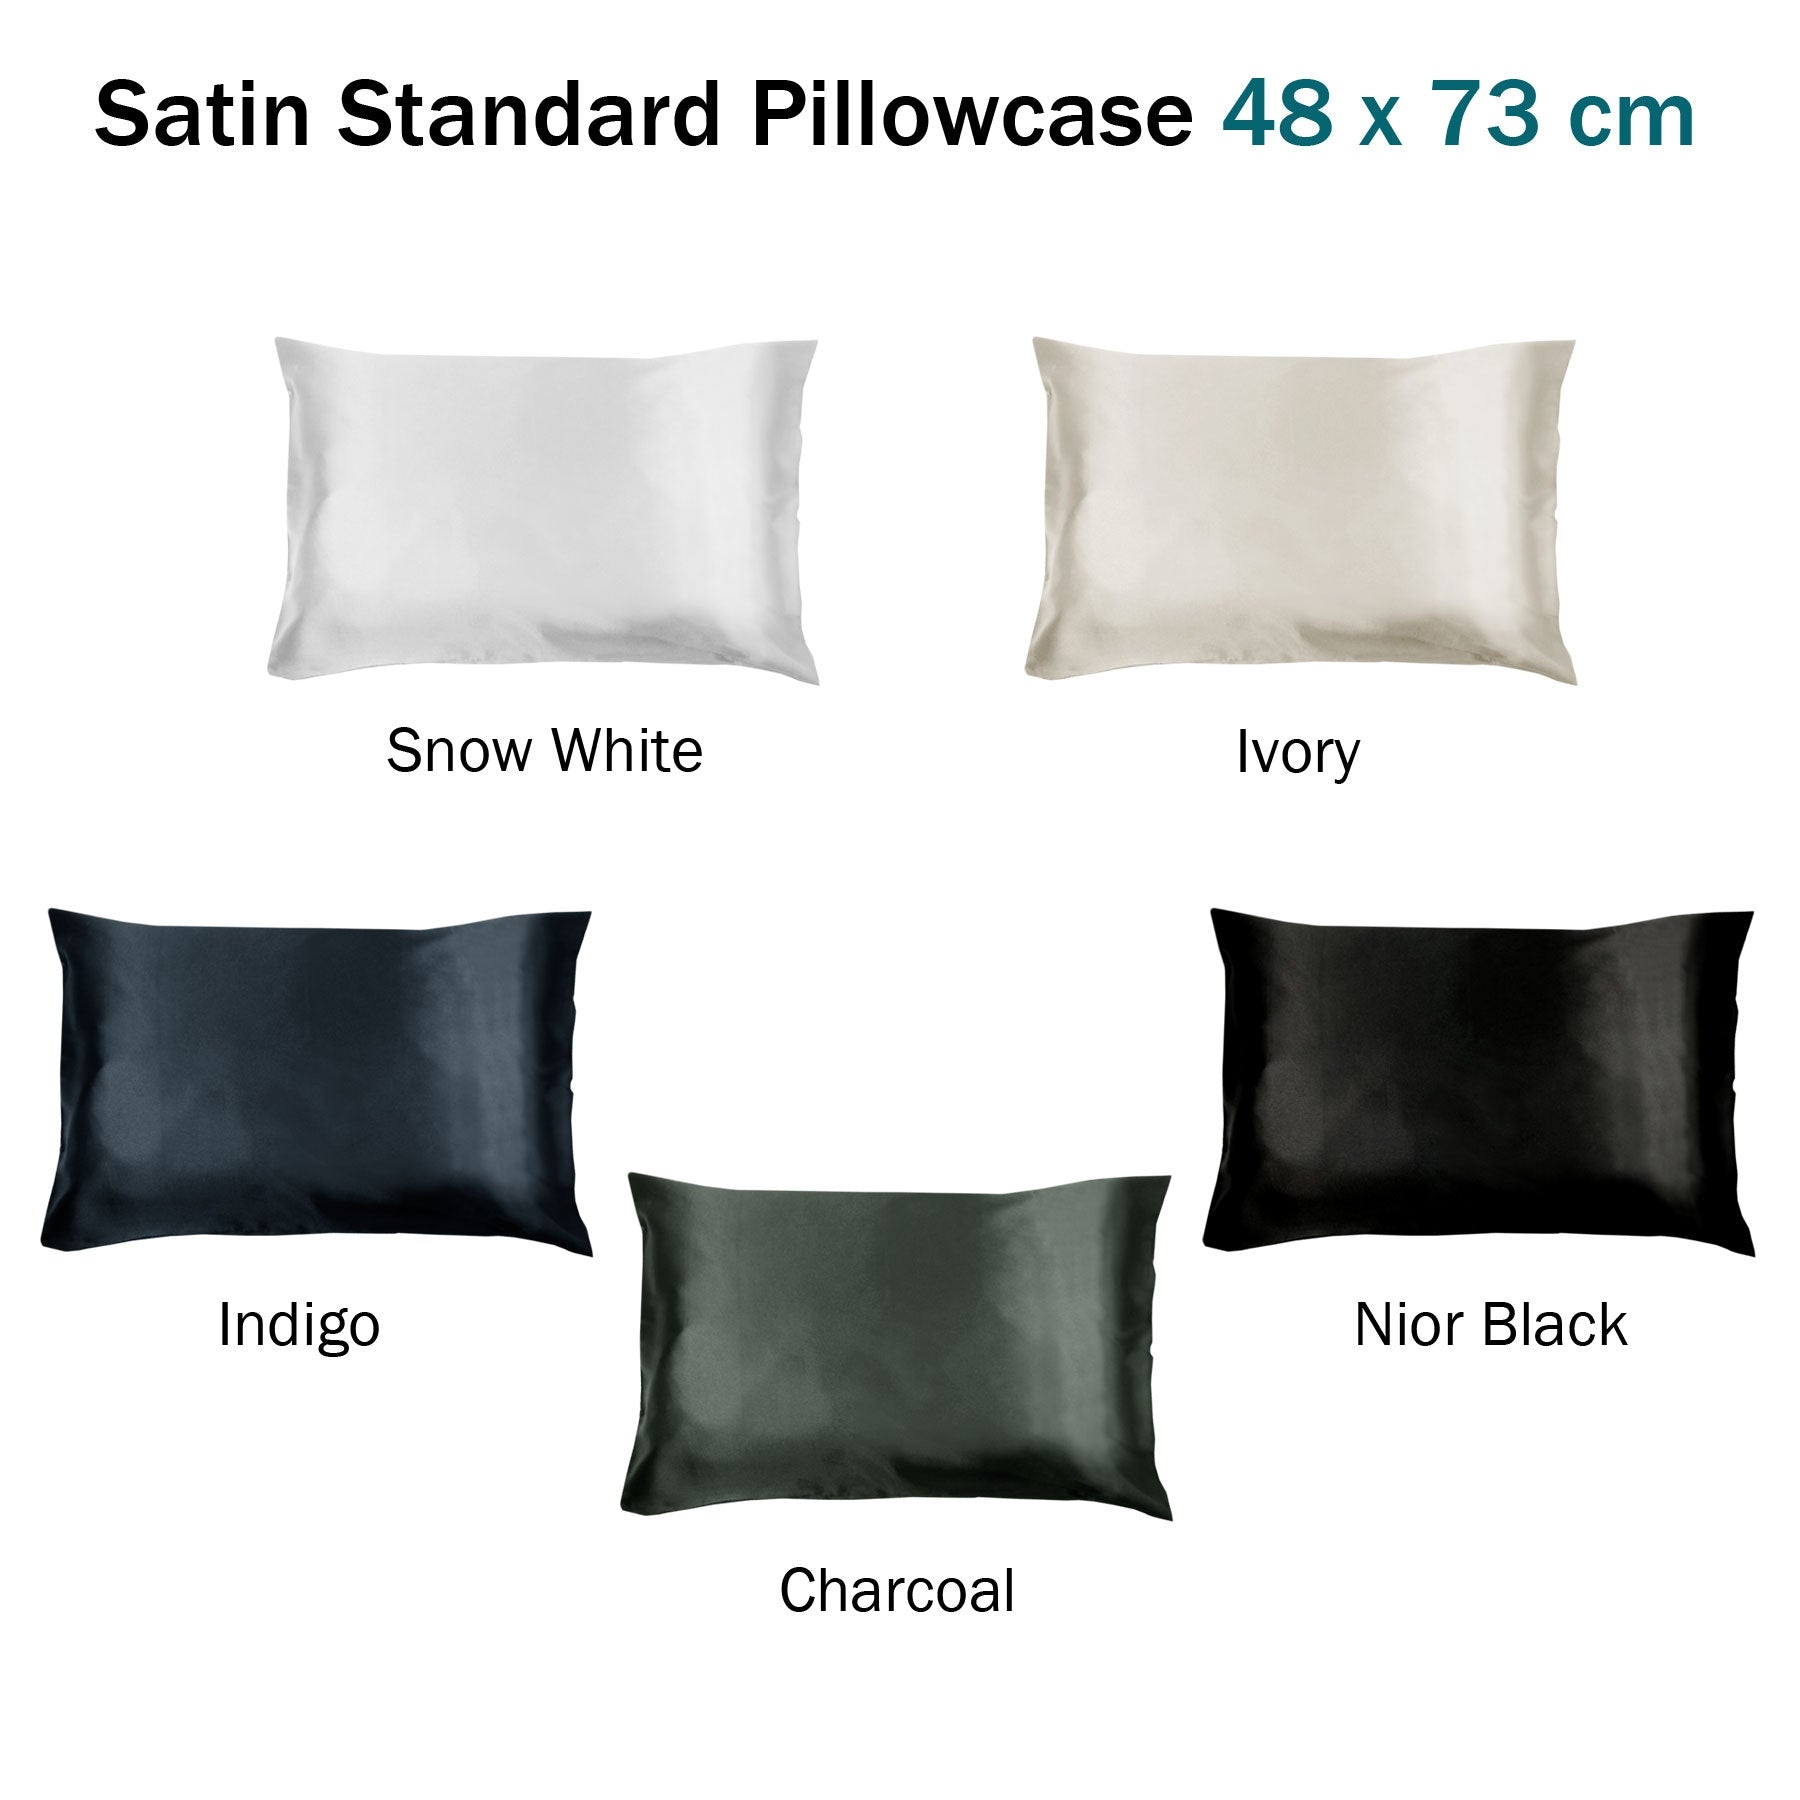 Satin Standard Pillowcase Charcoal